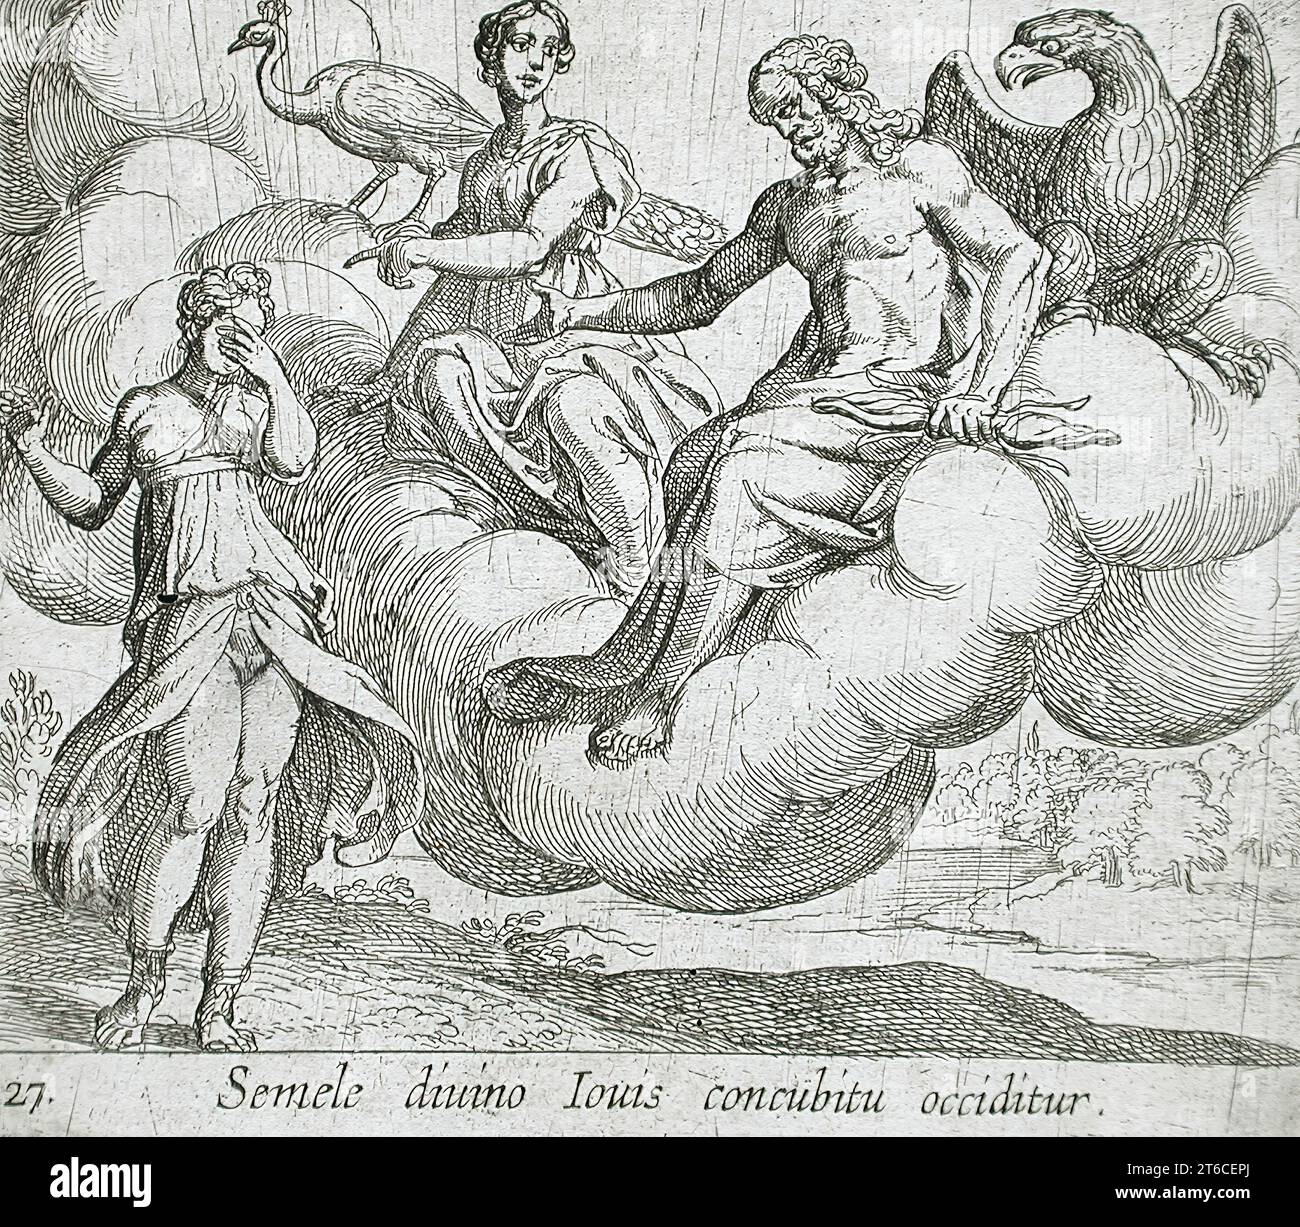 Semele's Wish, published 1606. From The Metamorphoses of Ovid, pl. 27. Stock Photo